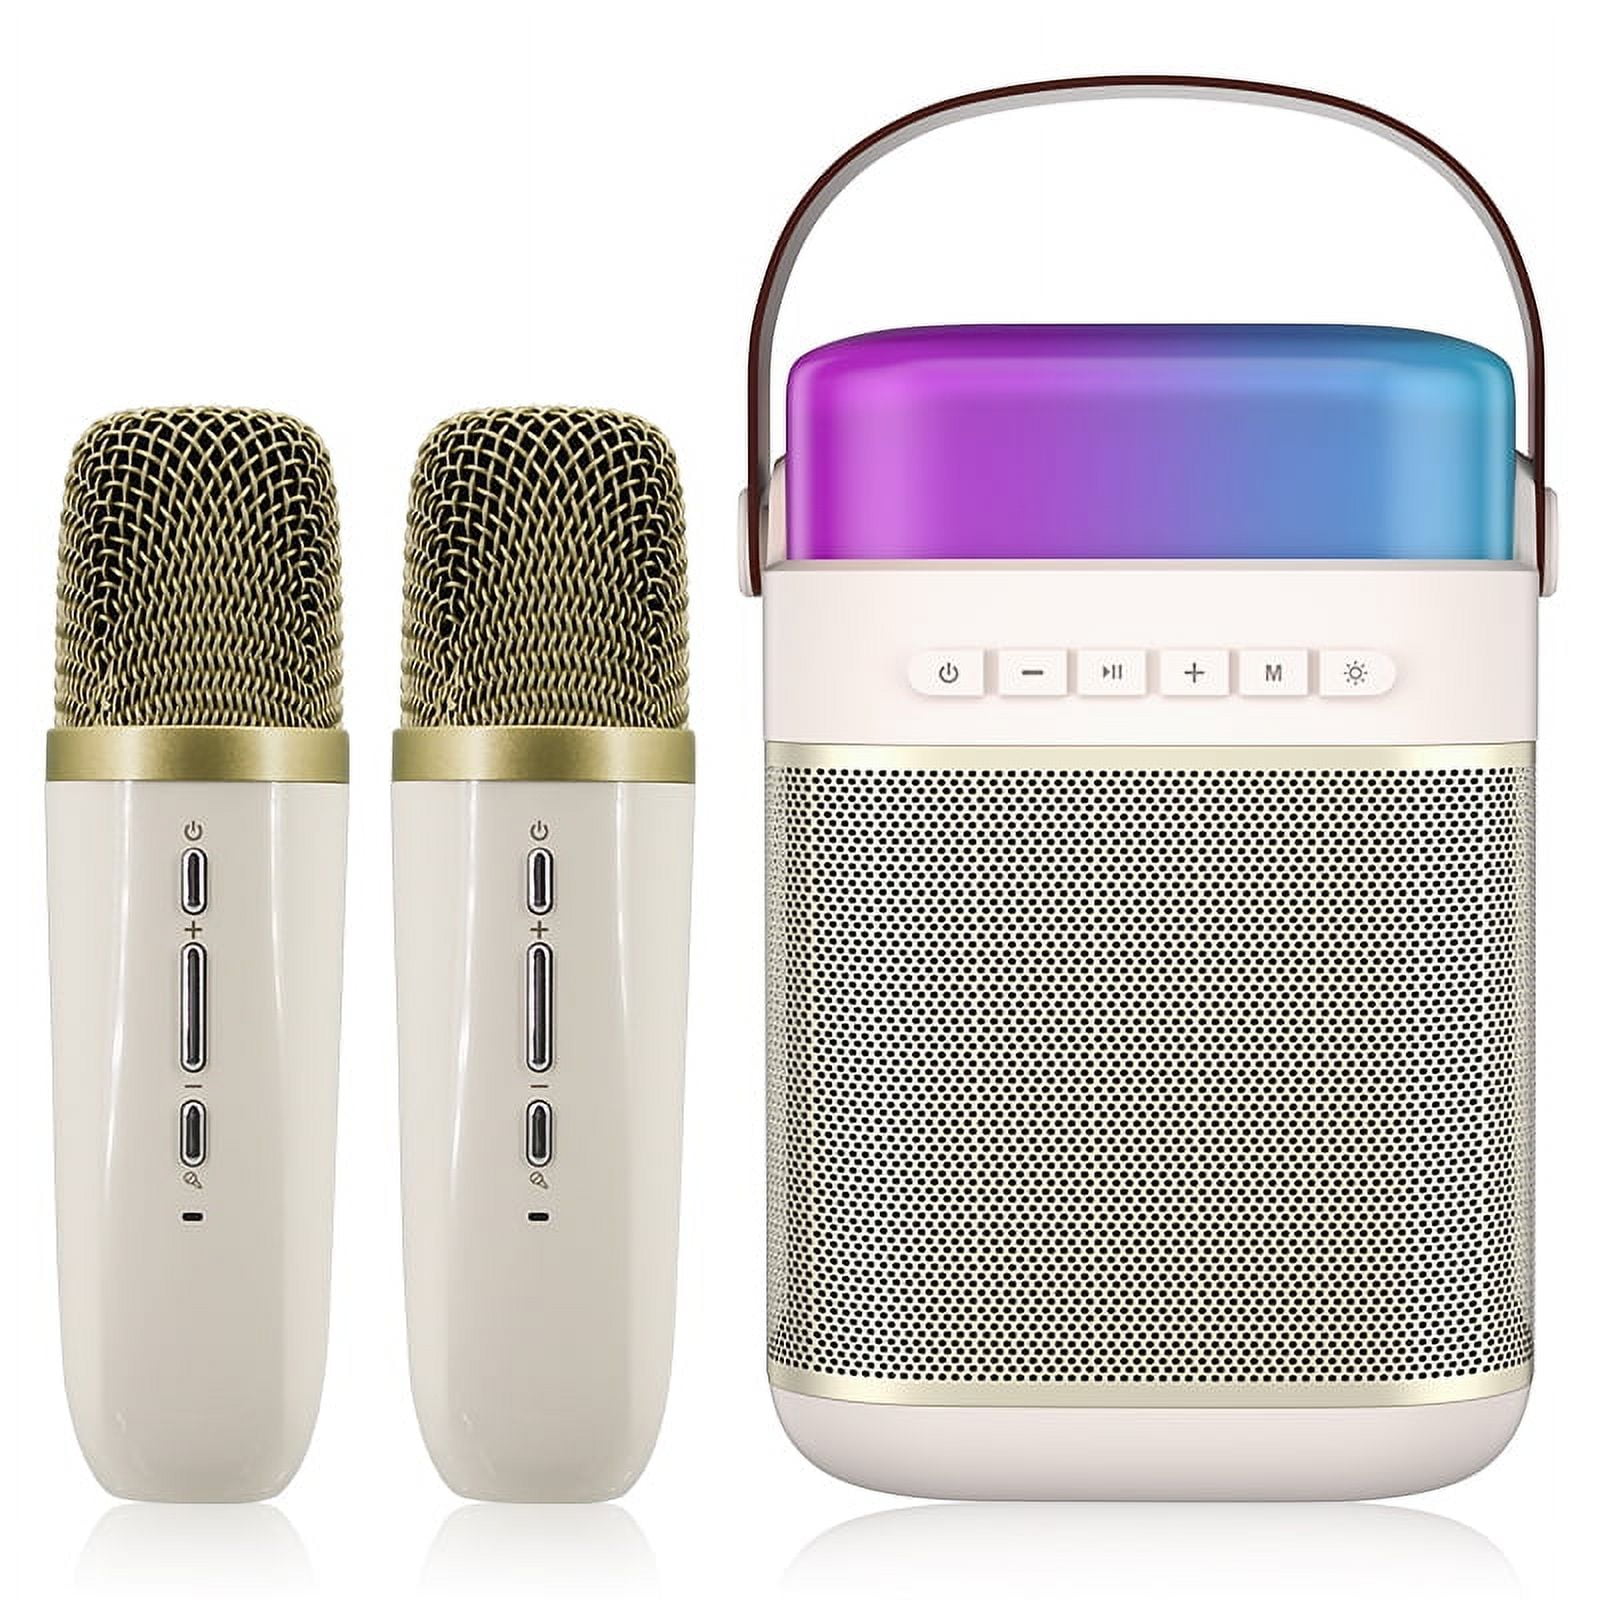 Mini Karaoke Machine For Kids, Portable Karaoke Bluetooth Speaker